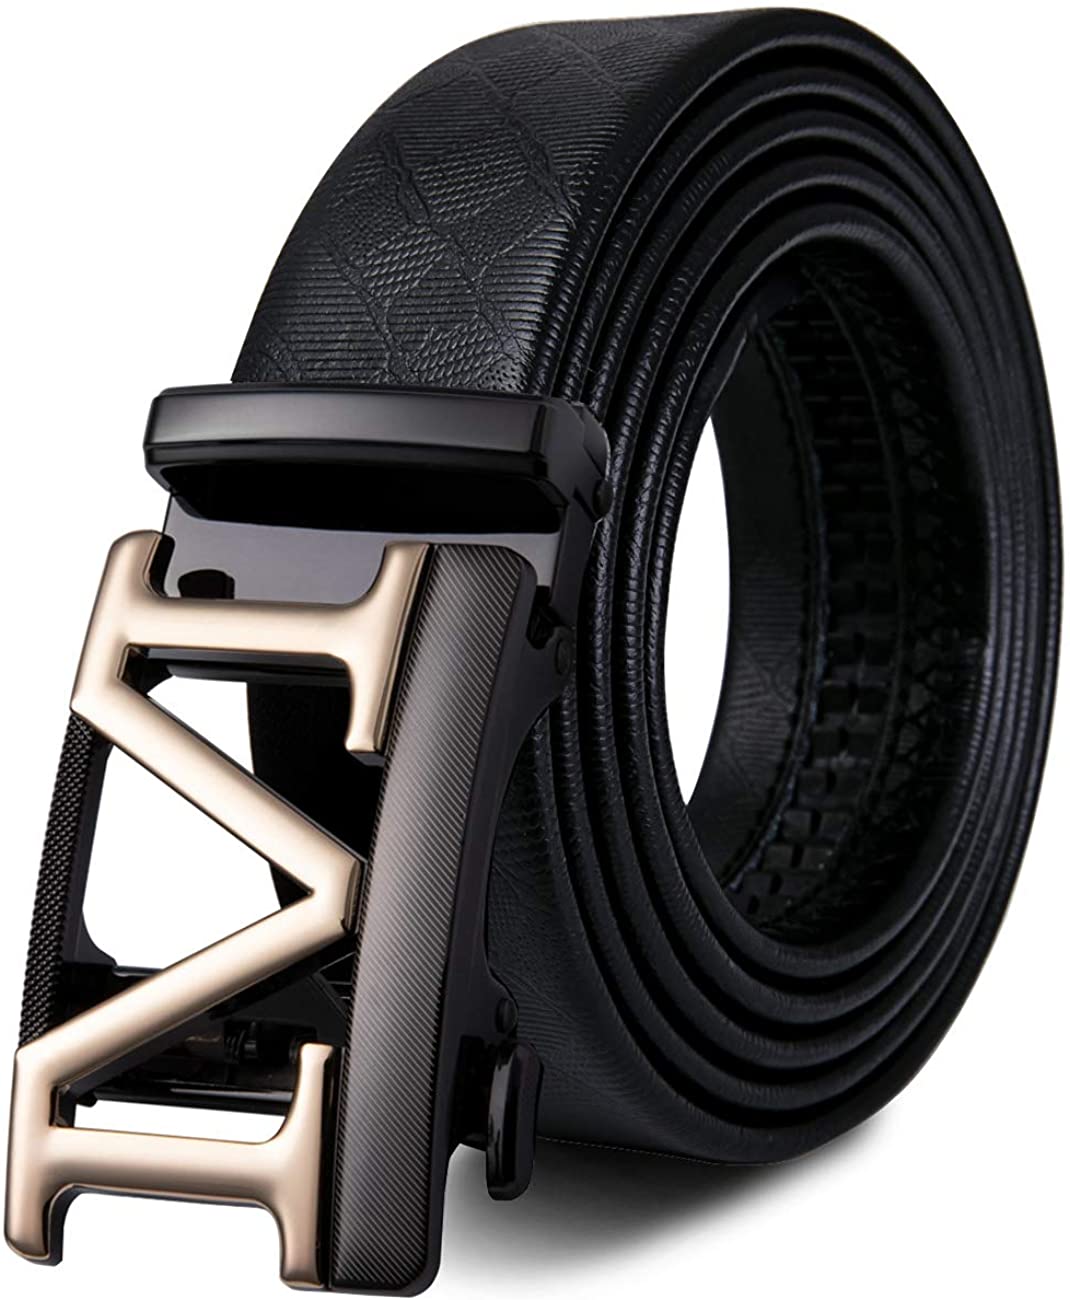 Hi-Tie Men Dress Black Leather Ratchet Belt With Automatic Buckle Gift Box. 